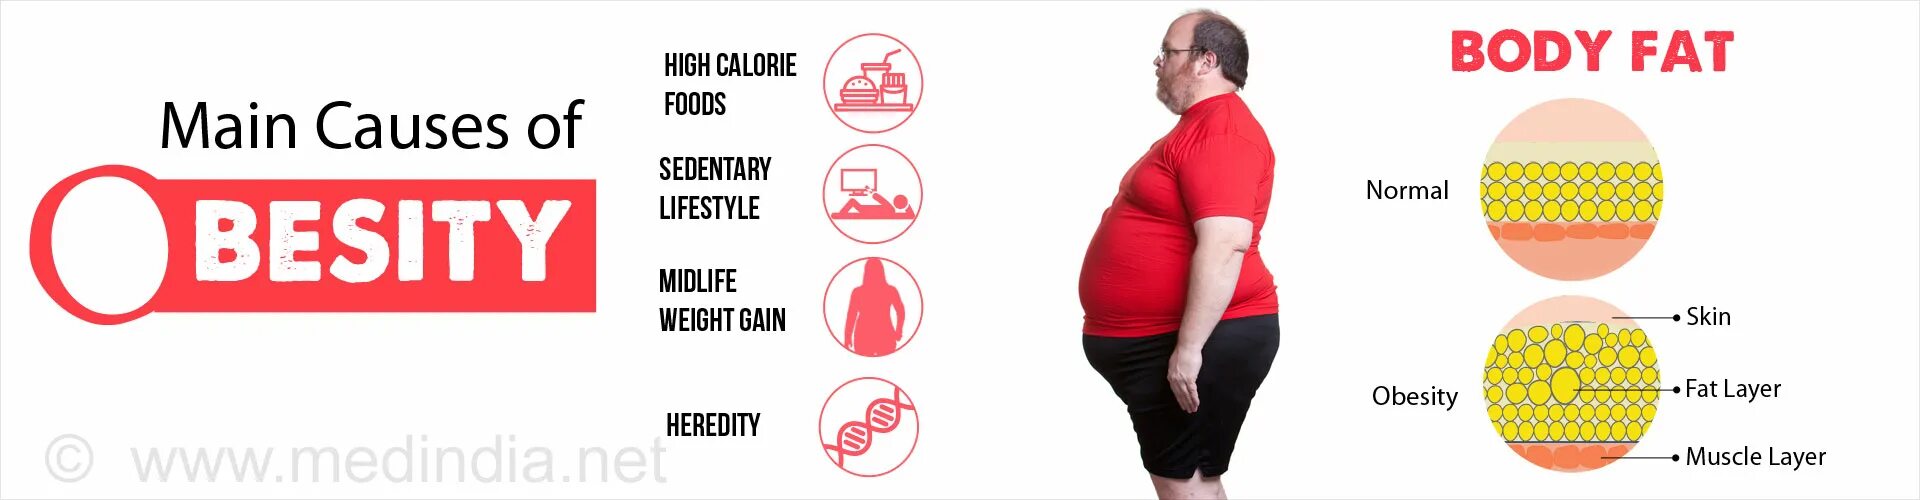 Fat body транскрипция. Fat body перевод. Fat body 3 класс. Main causes of obesity. Перевести на русский bodies